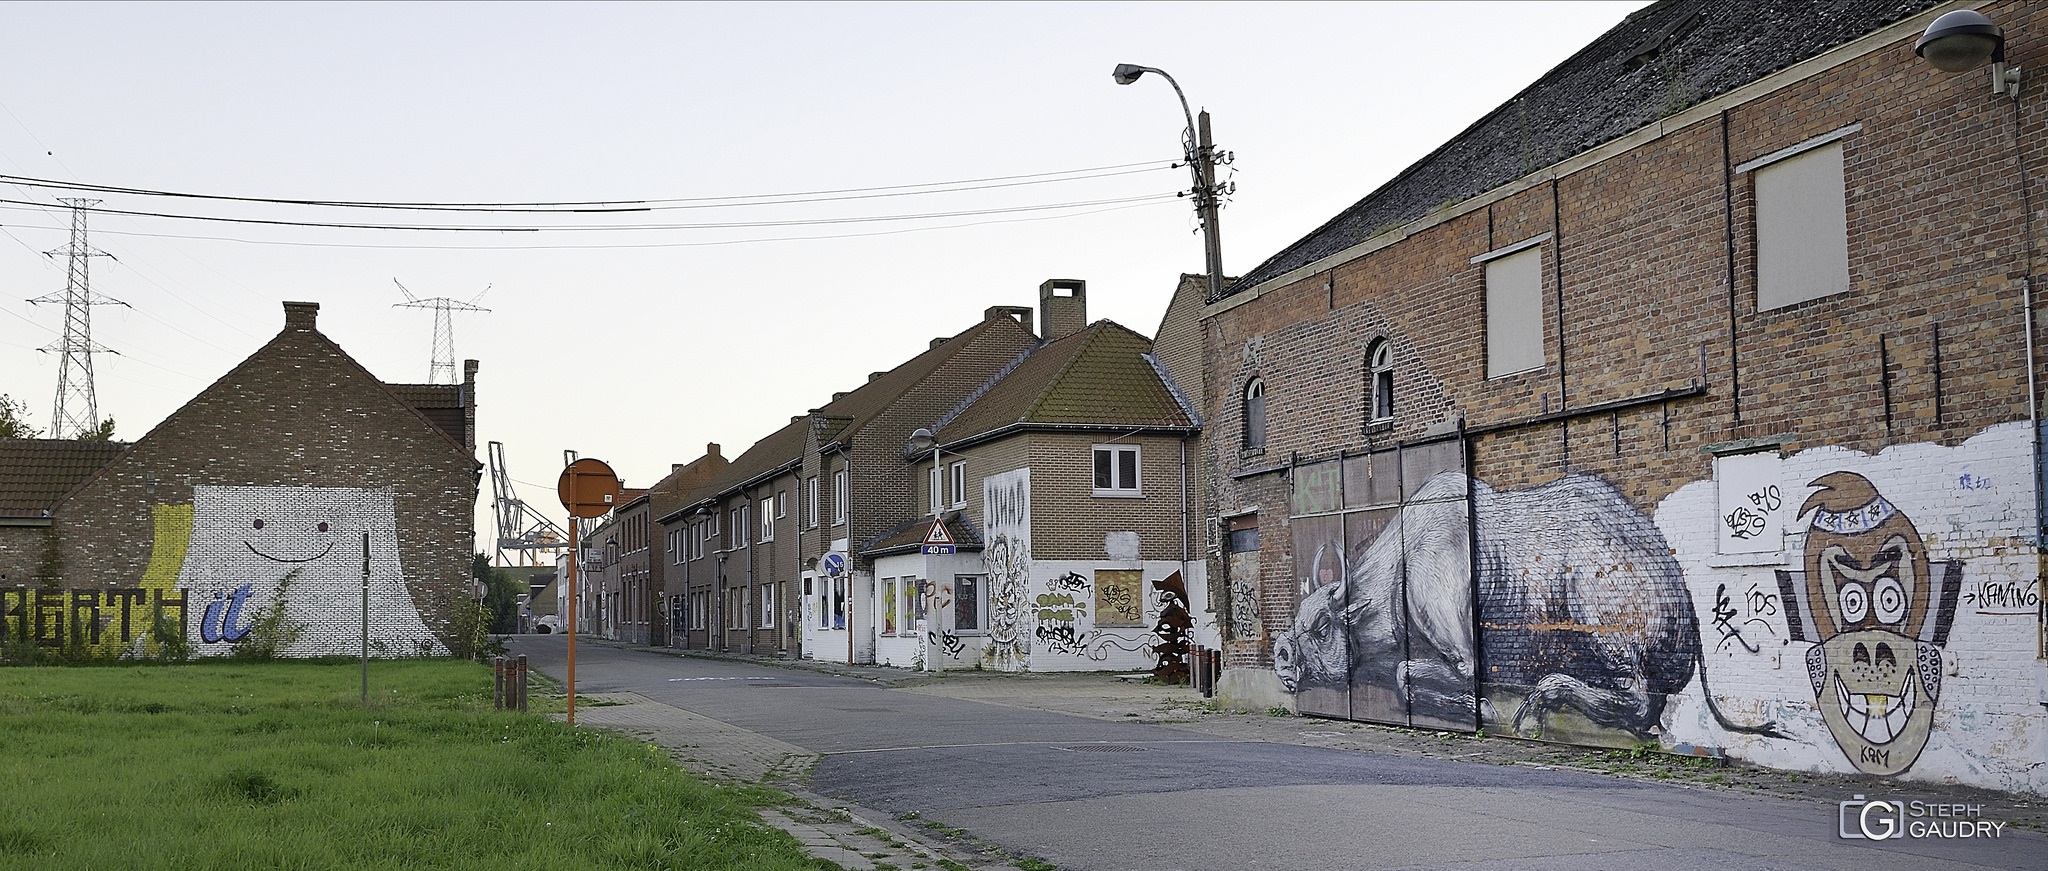 Doel, Abandoned street